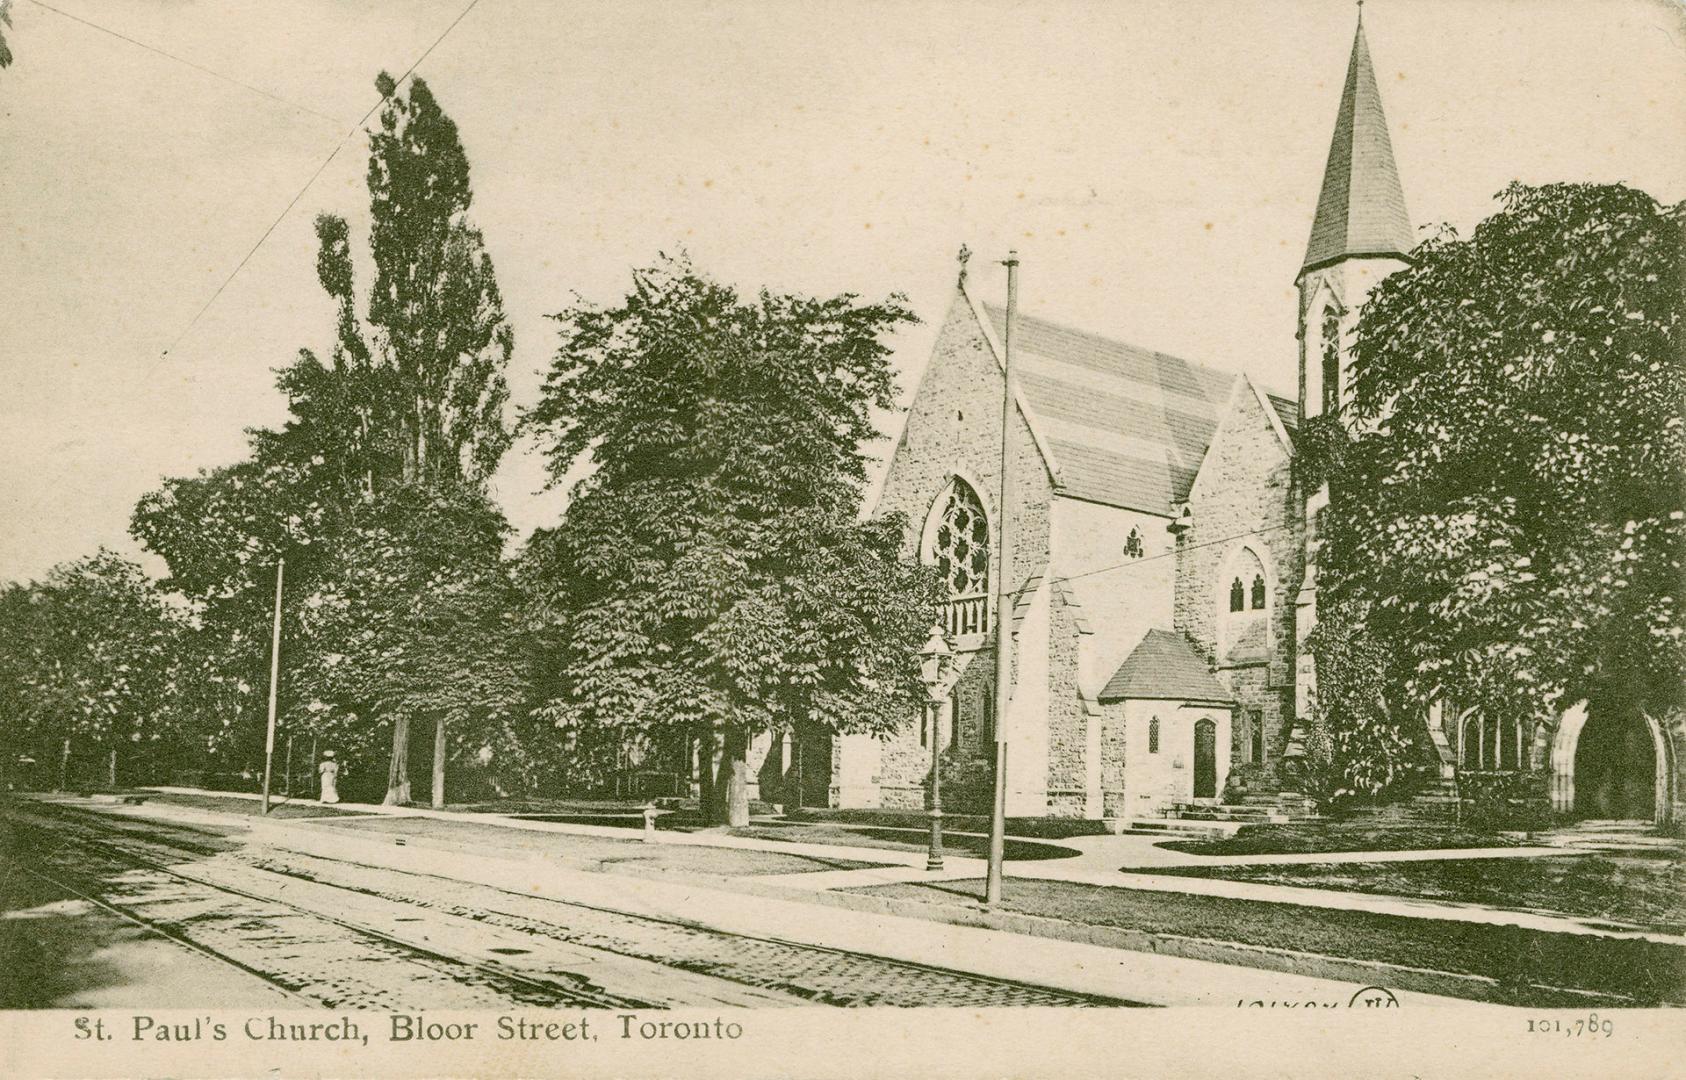 St. Paul's Church, Bloor Street, Toronto